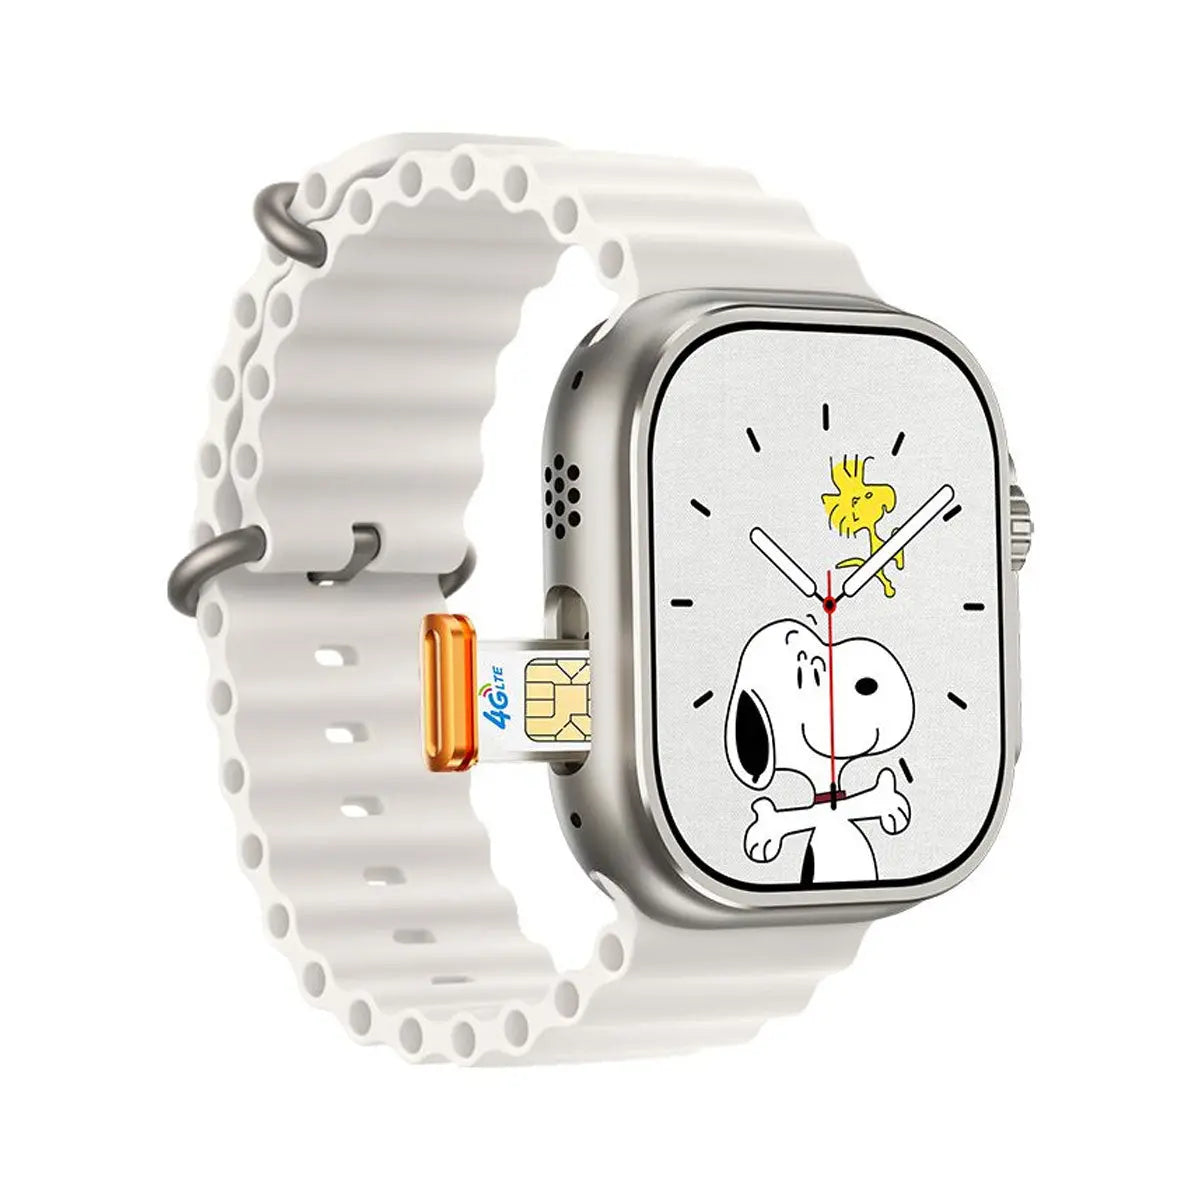 Reloj Smartwatch Fralugio GS Ultra Android 8.1, WiFi, GPS, 8GB ROM